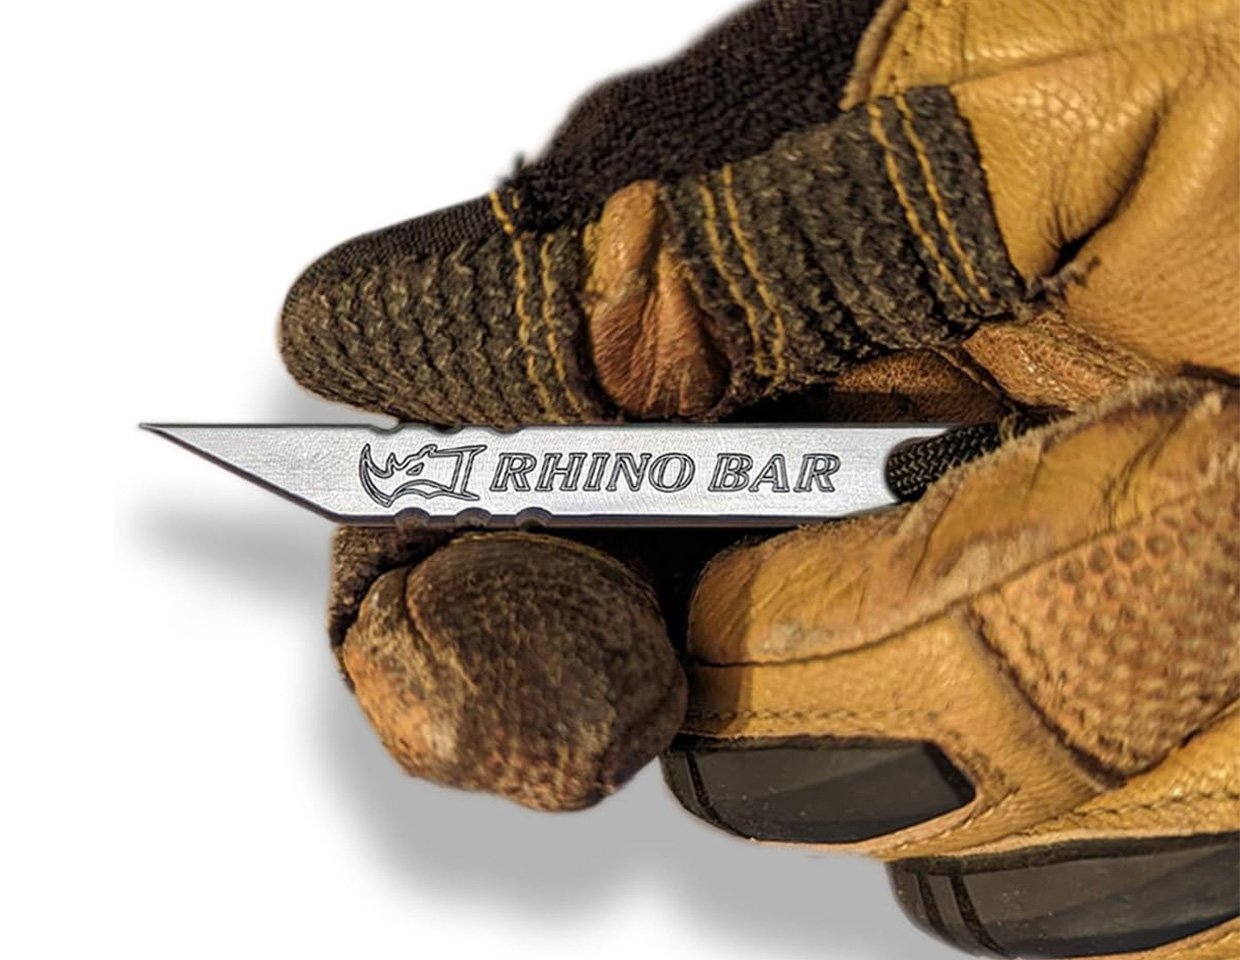 Milspin Rhino Bar EDC Pry Tool